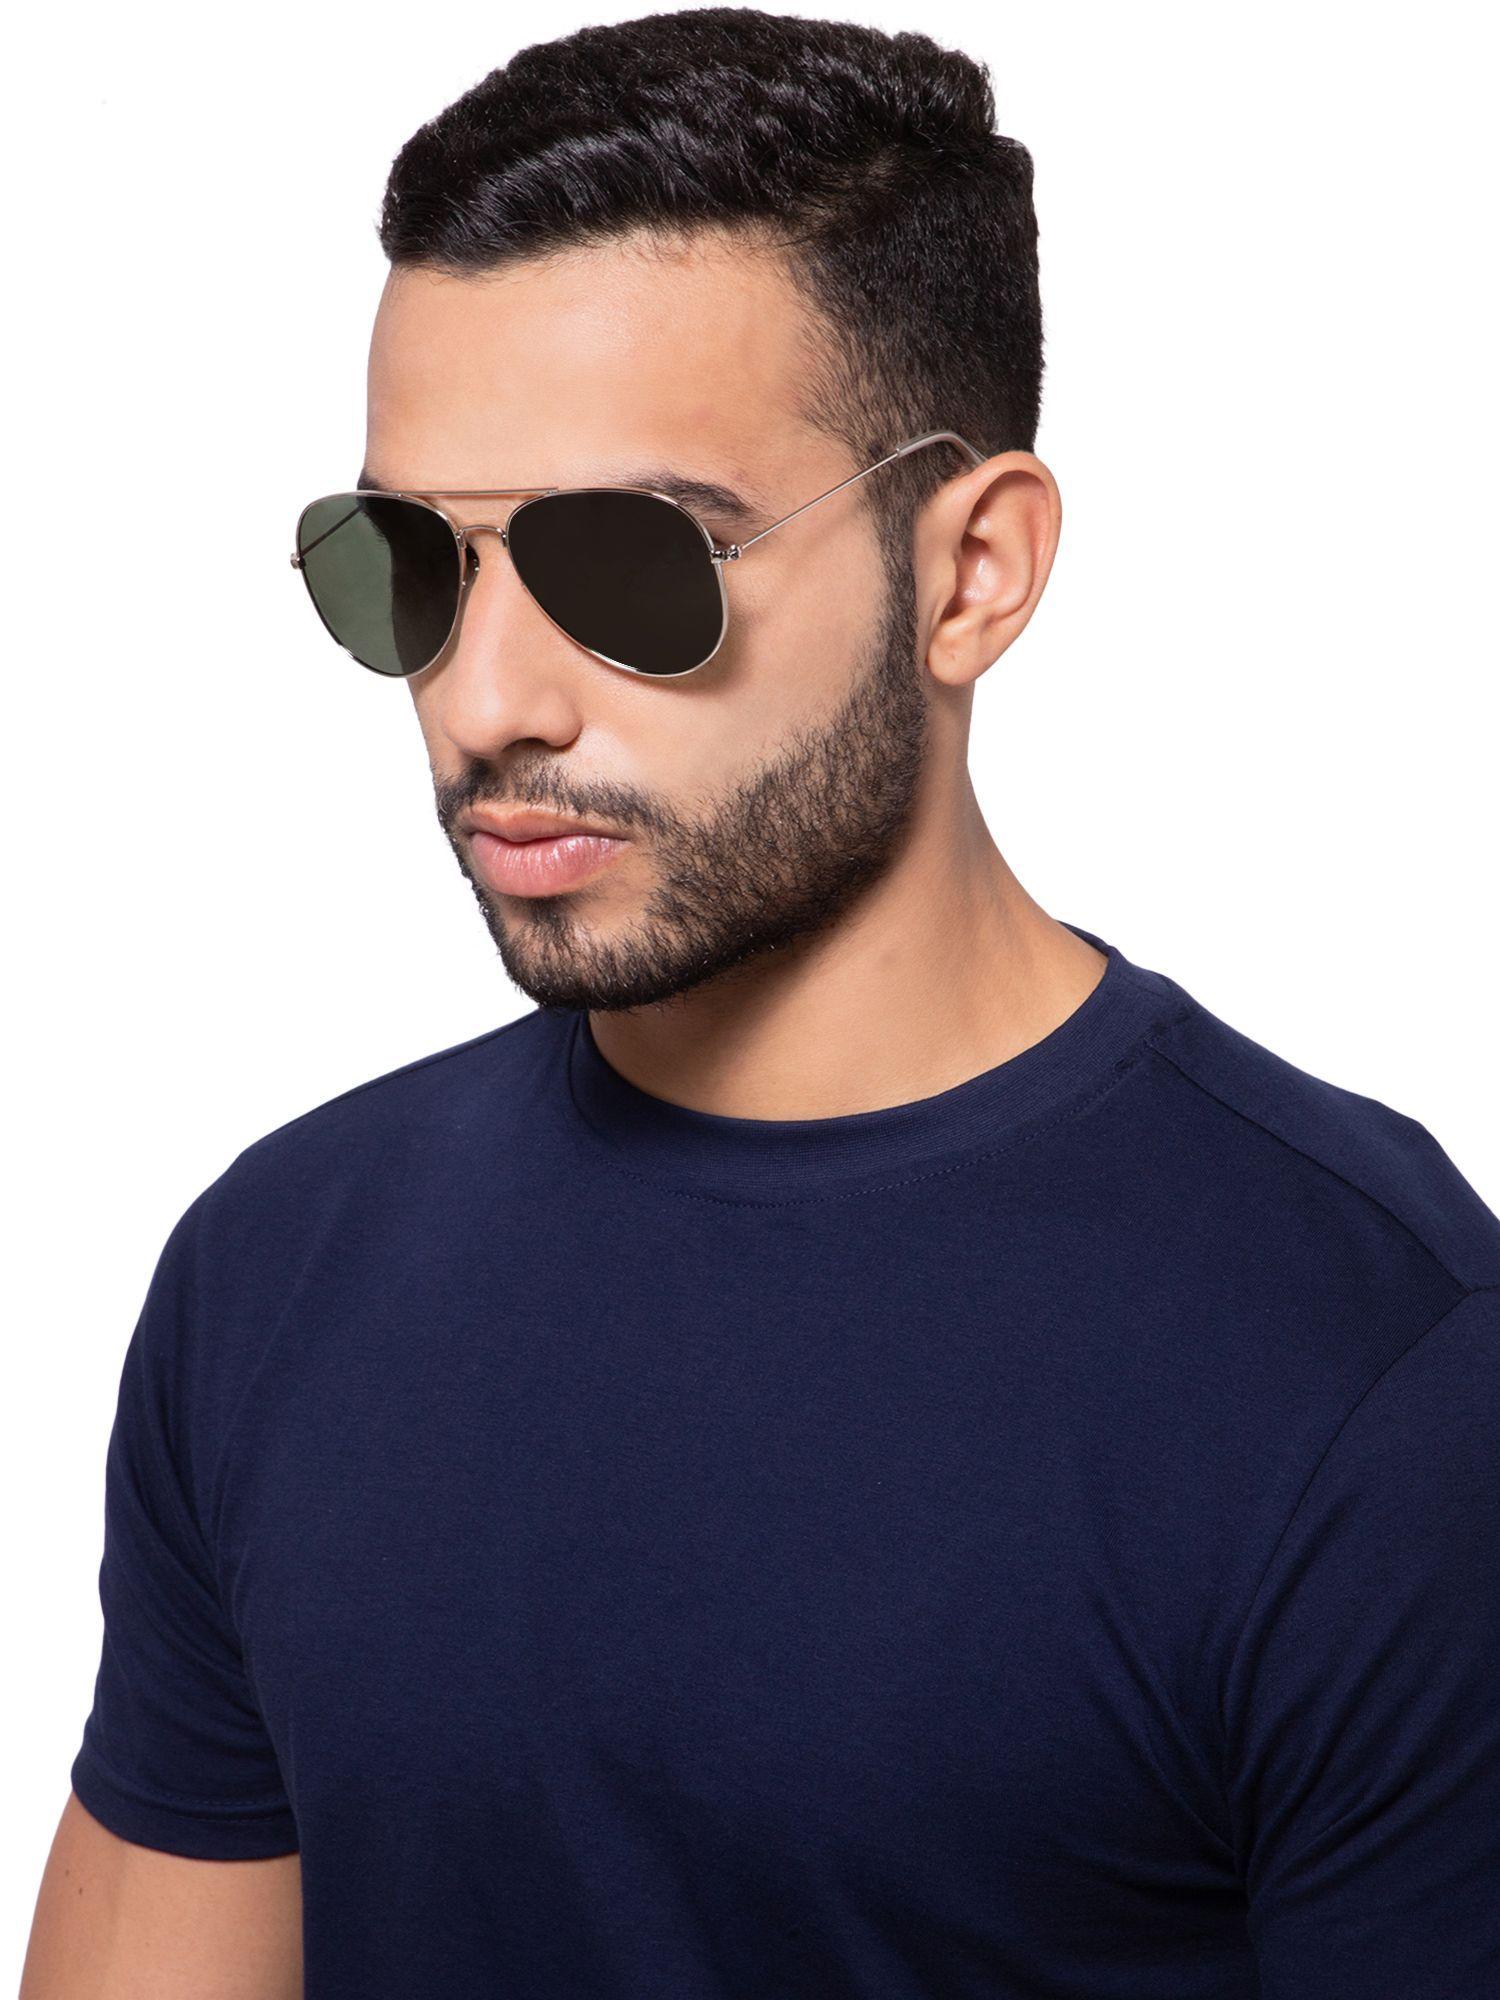 aviator 100% uv protect hd vision sunglasses silver and green